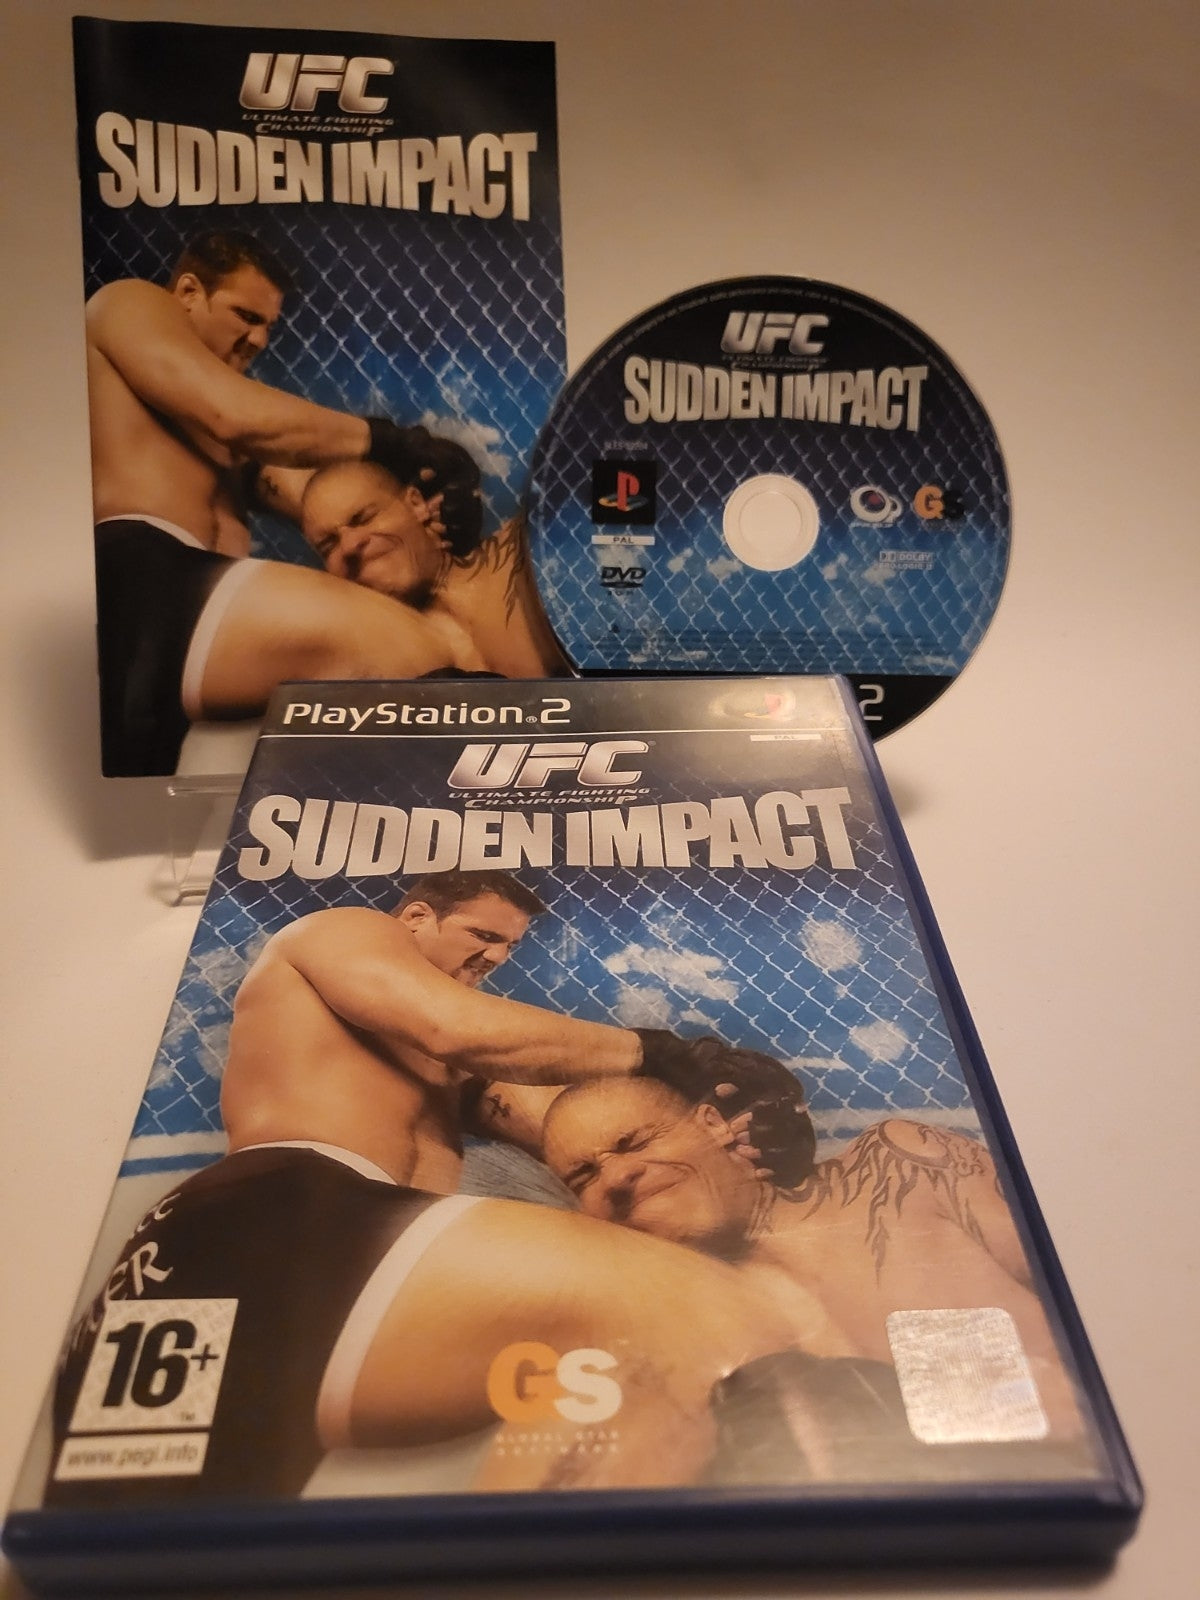 UFC Sudden Impact Playstation 2